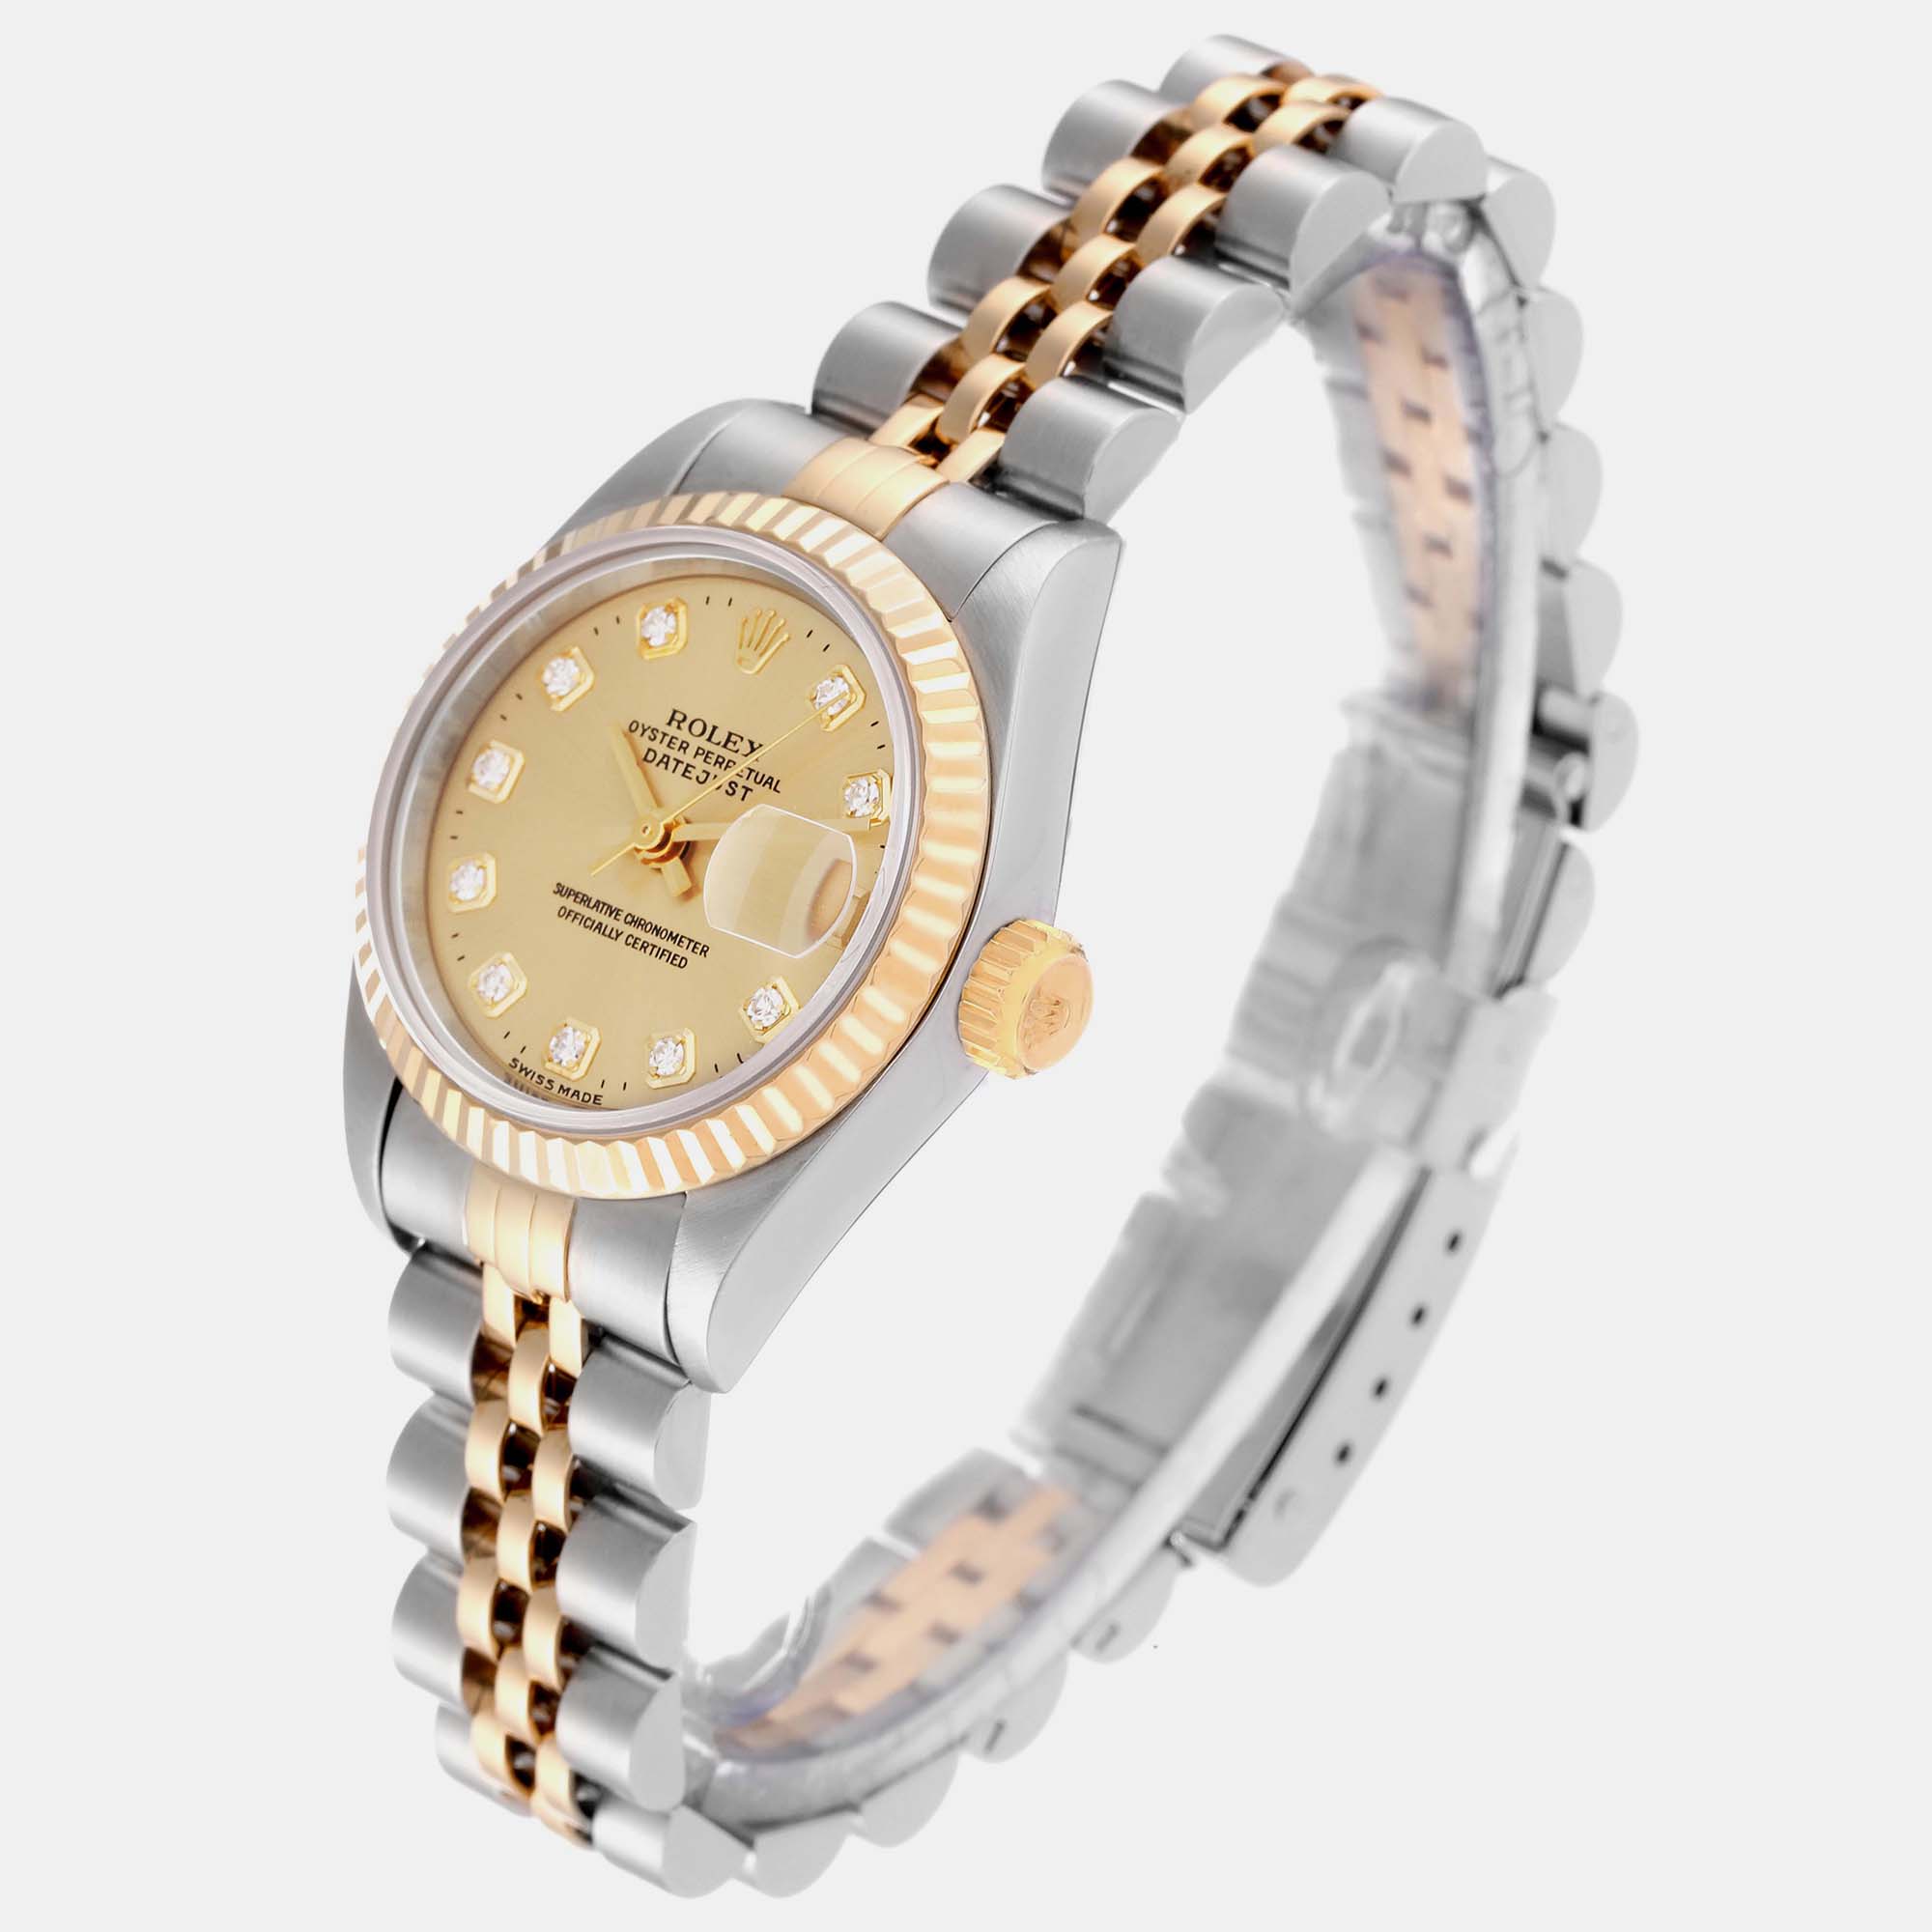 Rolex Datejust Steel Yellow Gold Champagne Diamond Dial Ladies Watch 69173